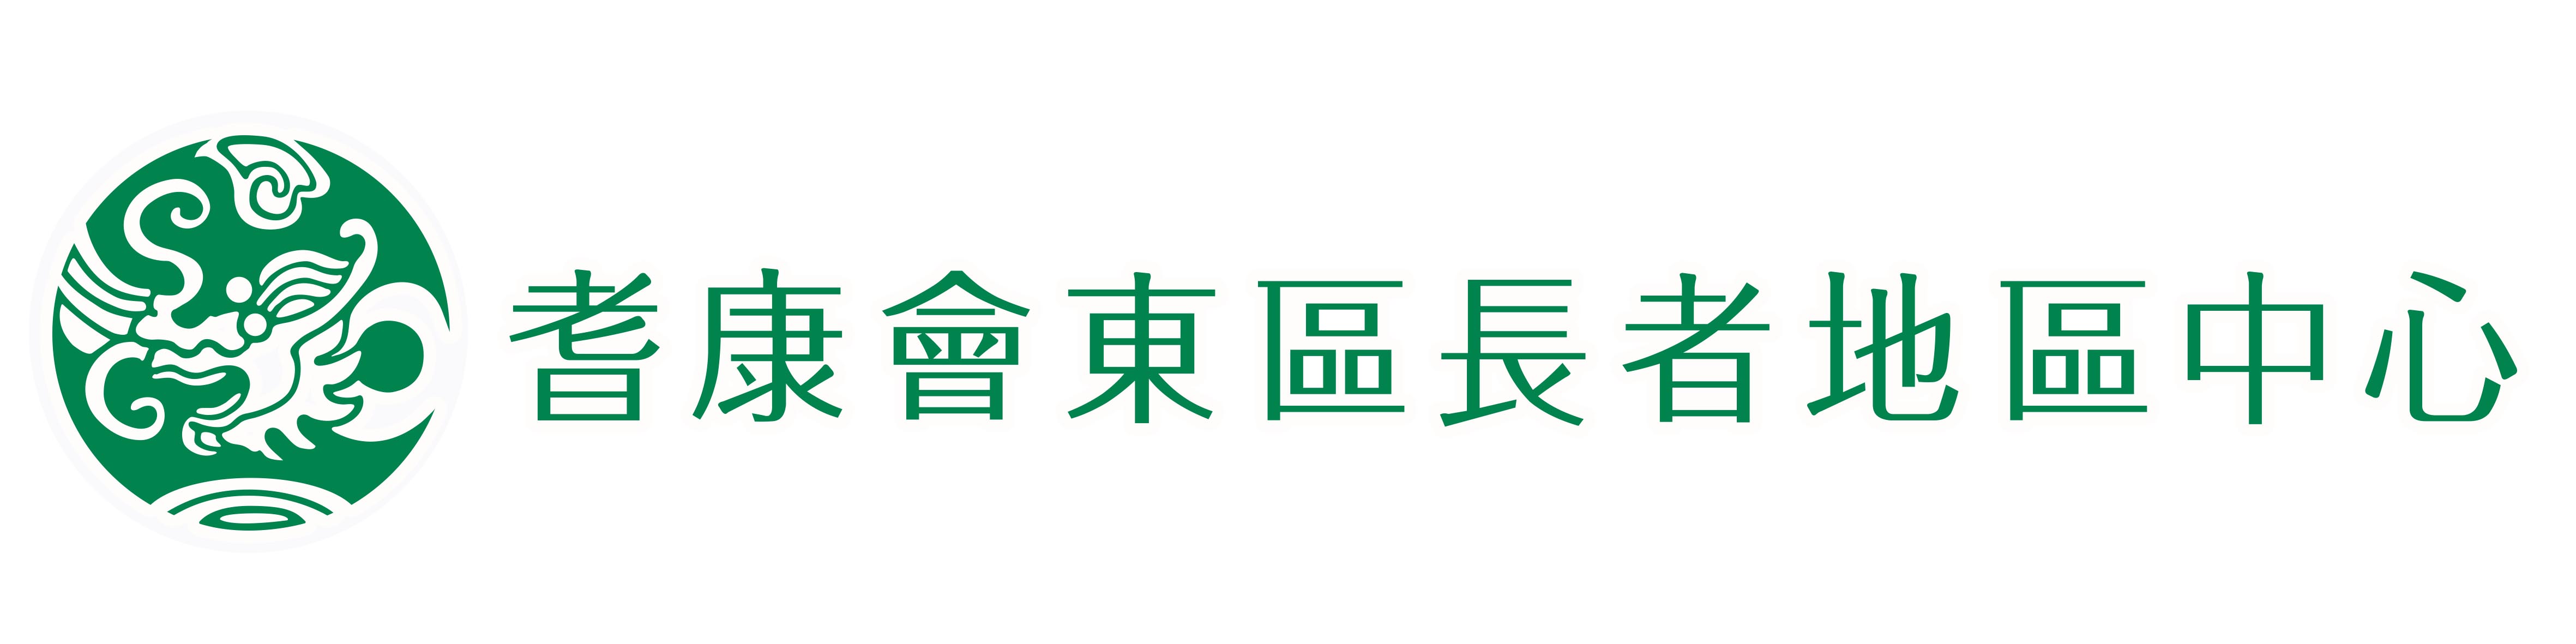 中心logo